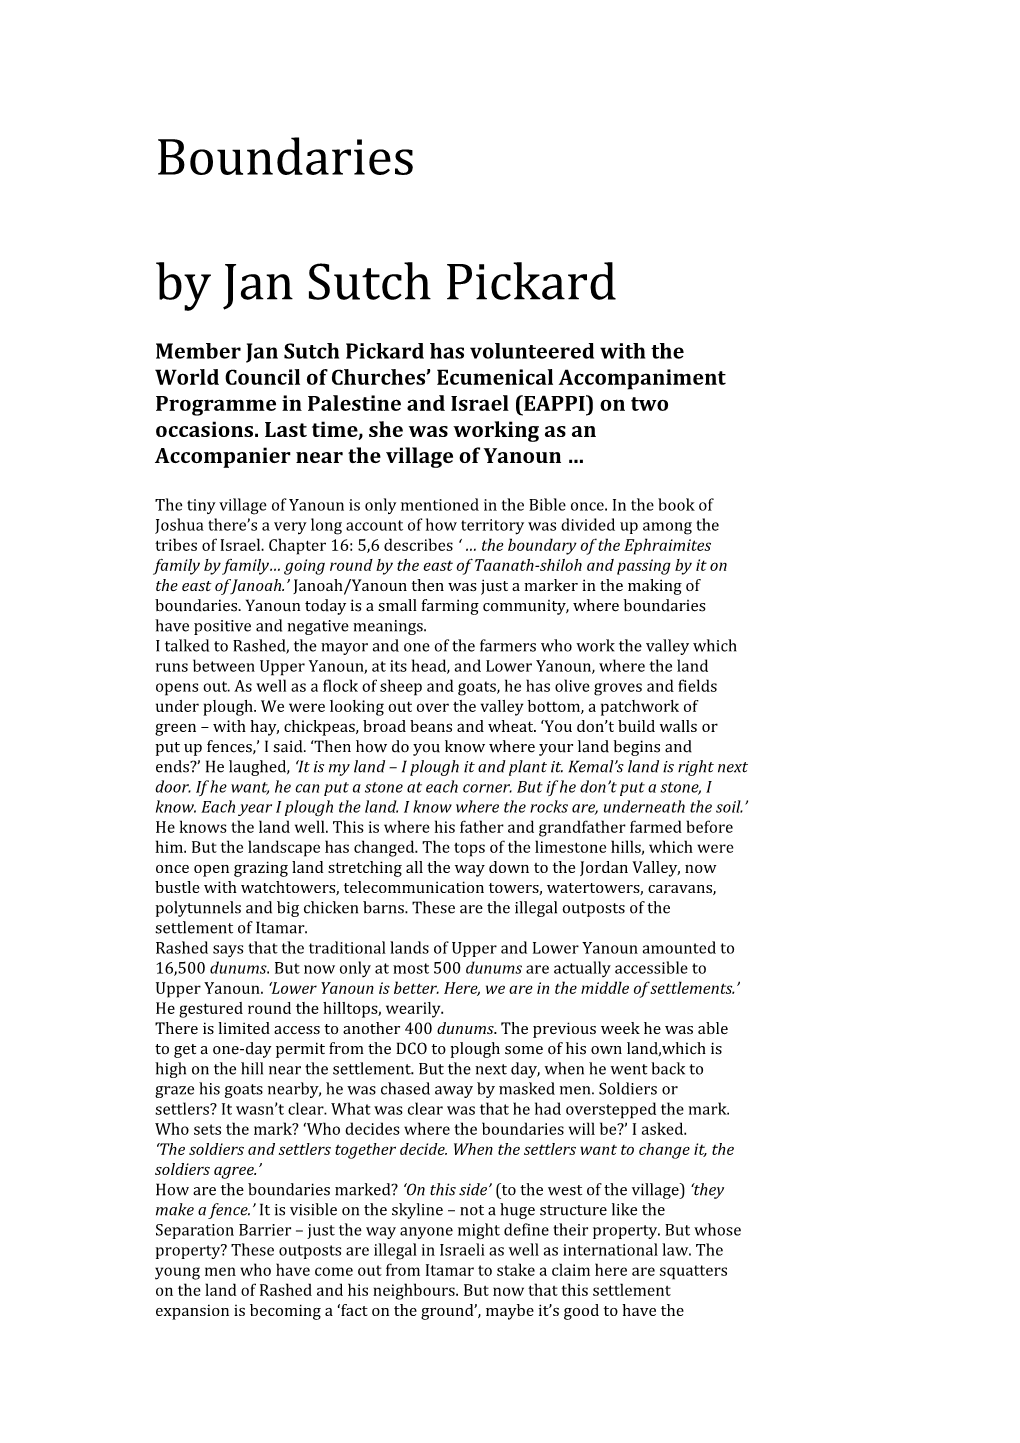 Member Jan Sutch Pickard Has Volunteered with The